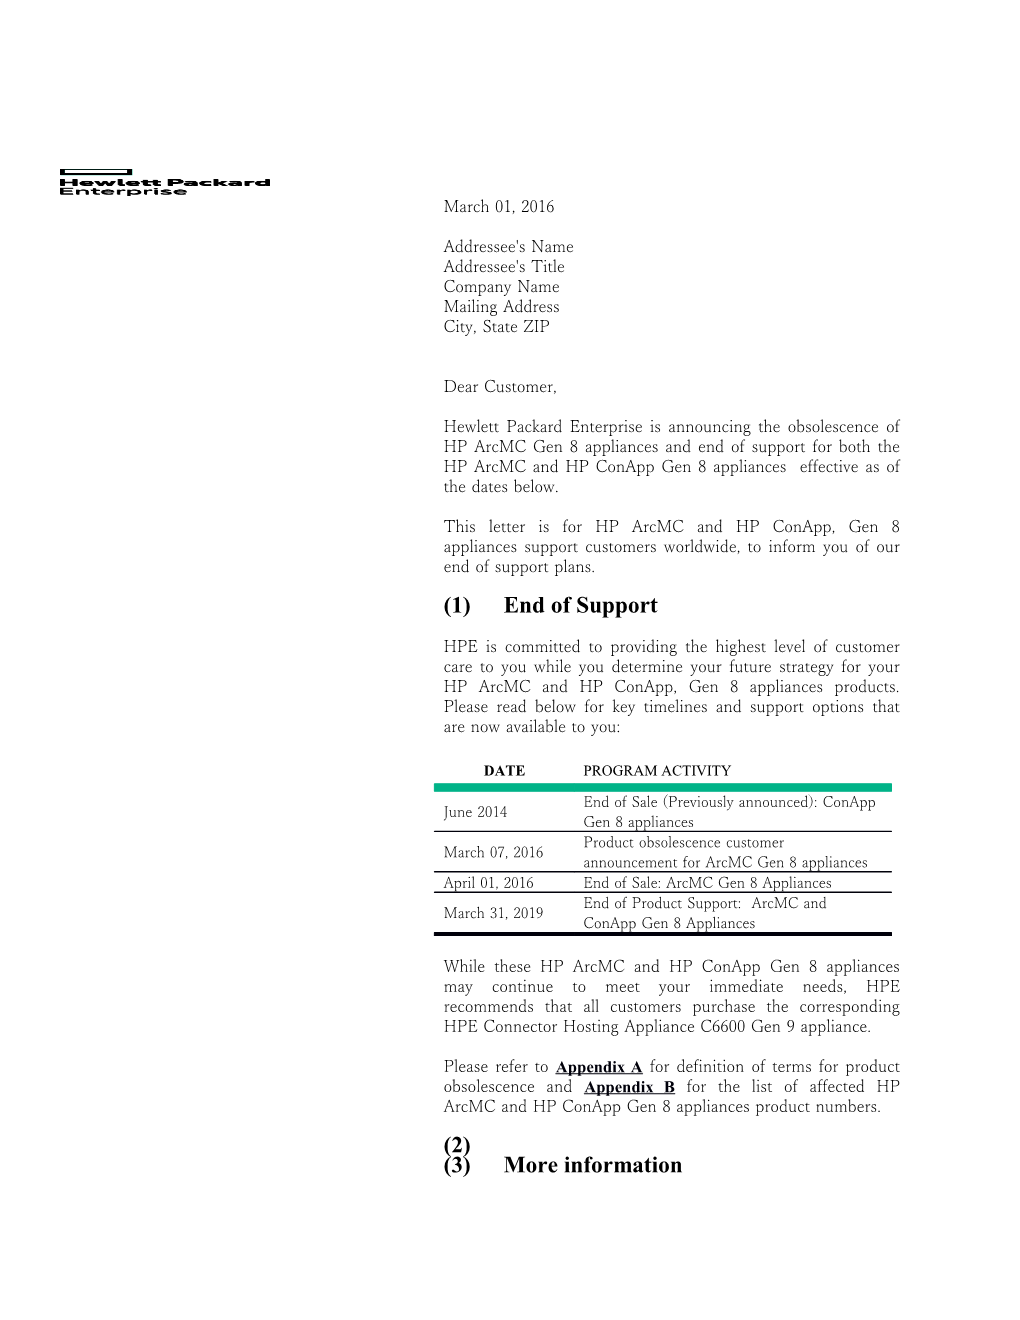 Hewlett Packard Enterprise - Customer Letter